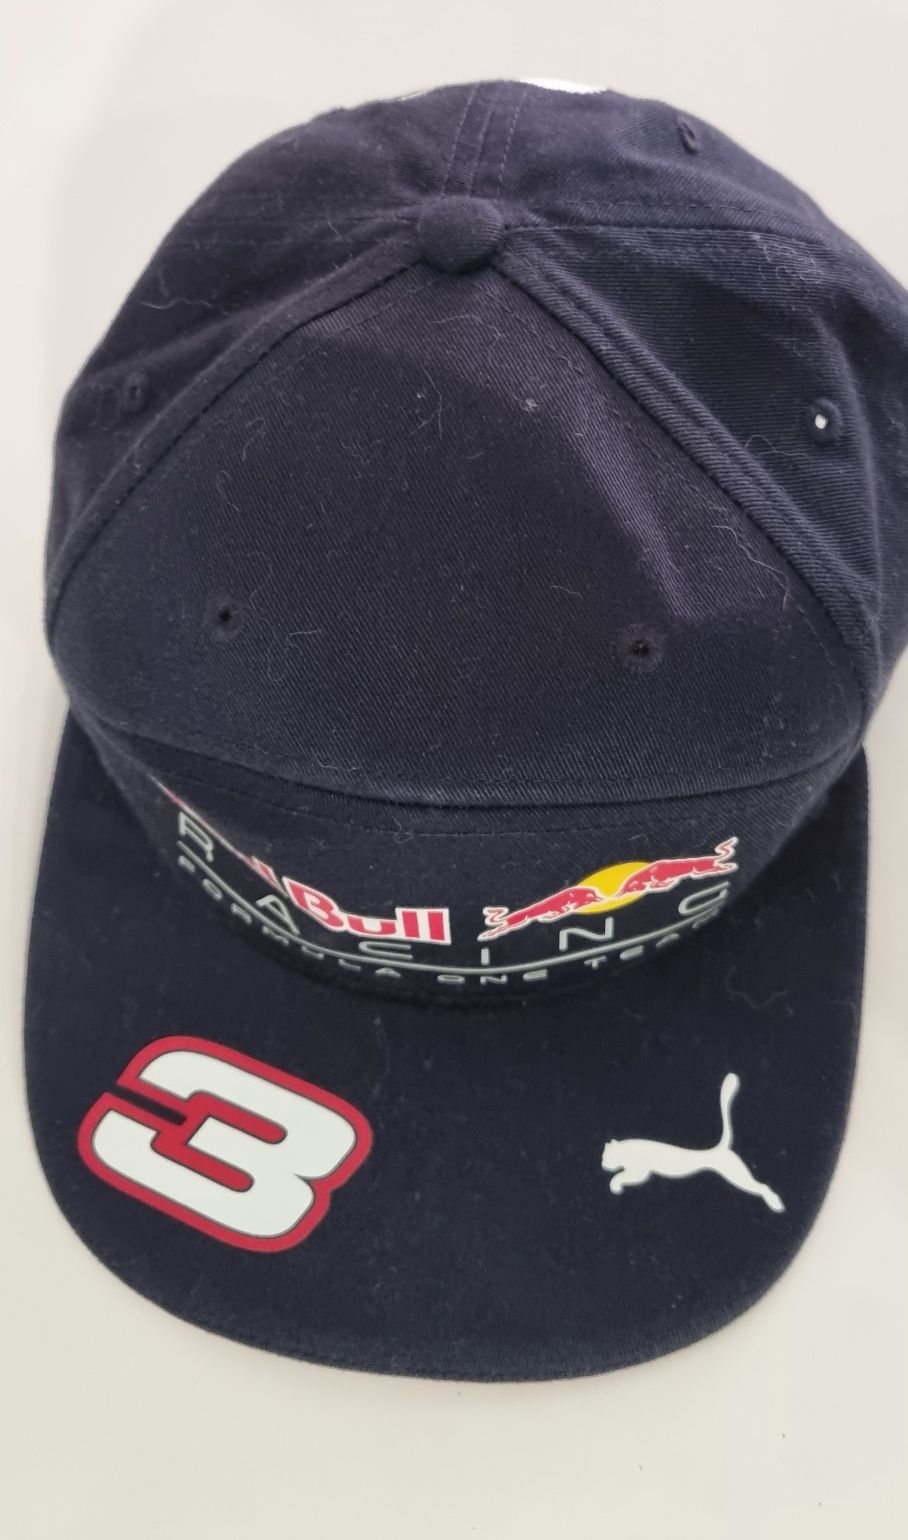 Red bull  шапка LCR Racing F1 Daniel Ricciardo